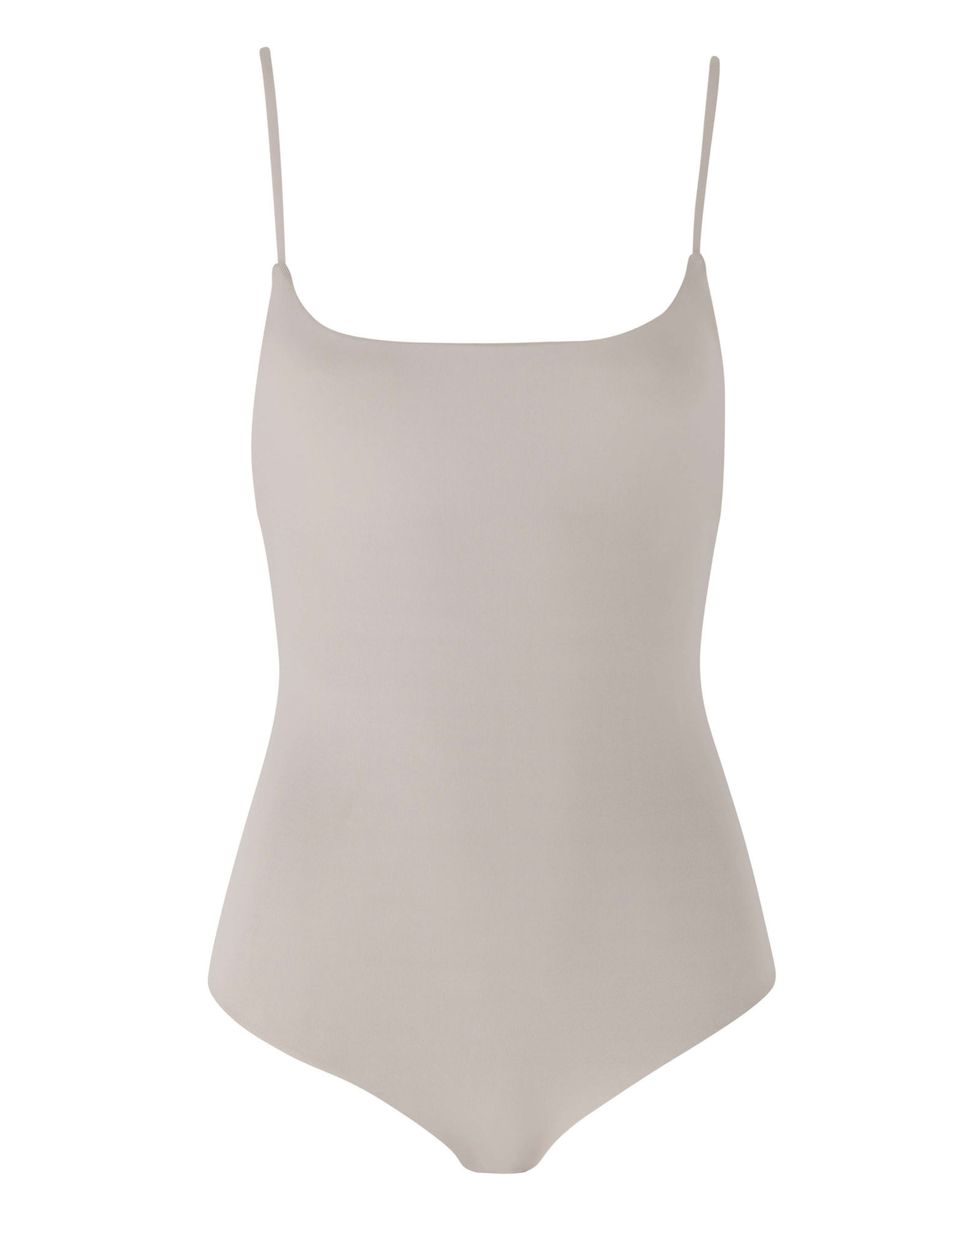 Product, White, Pattern, Undershirt, Black, Grey, Active tank, Undergarment, camisoles, Sleeveless shirt, 